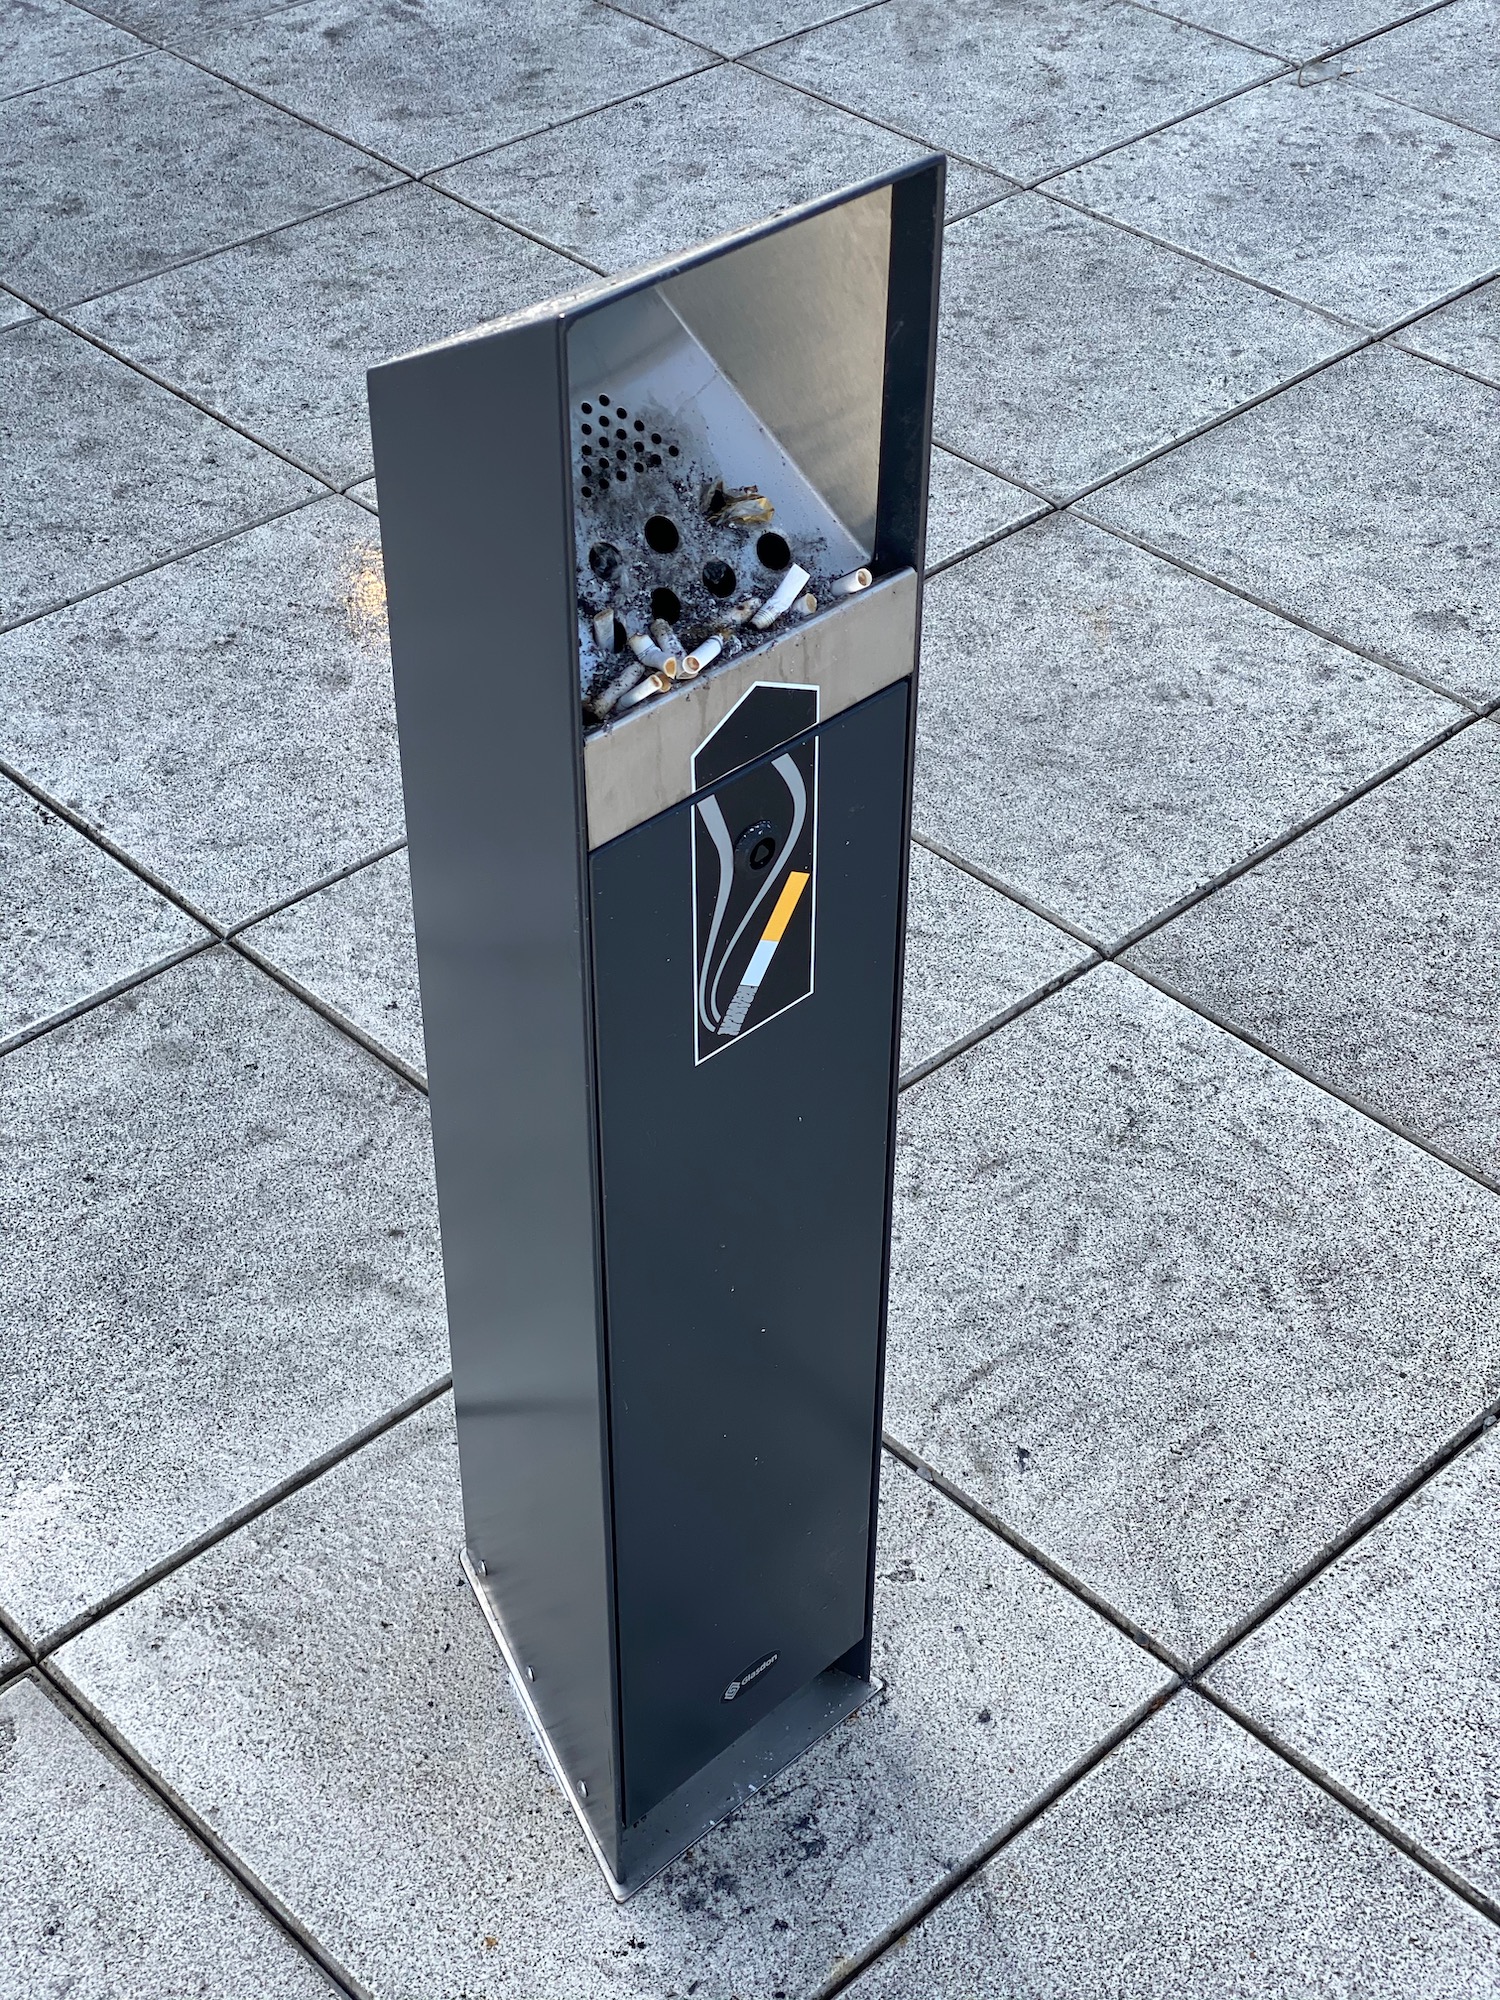 a cigarette dispenser on a tile floor